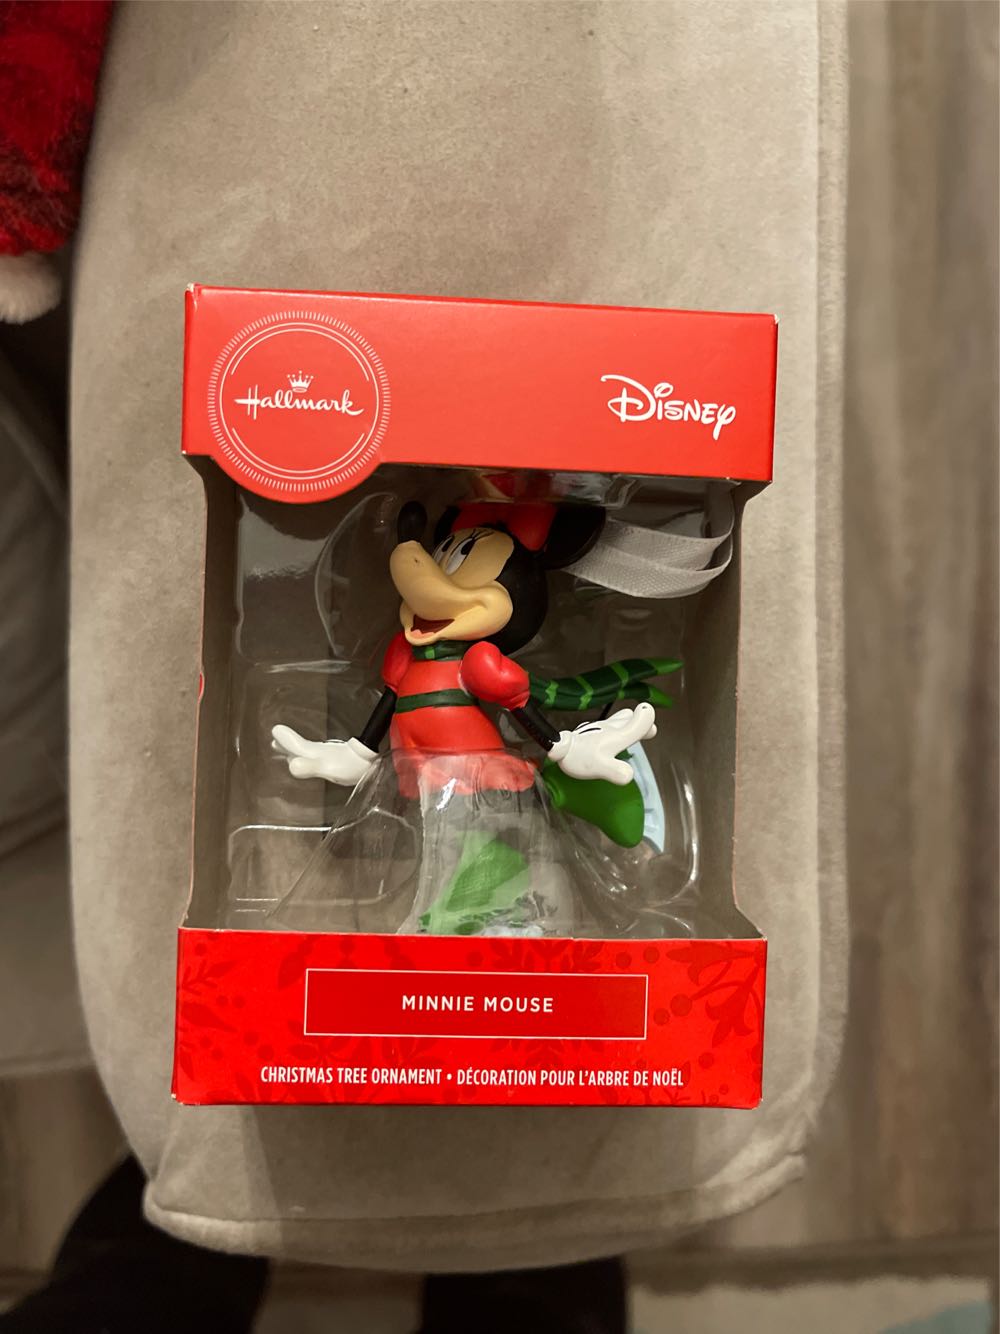 Minnie Mouse - Hallmark Keepsake Ornament (Disney - Minnie Mouse) ornament collectible - Main Image 1